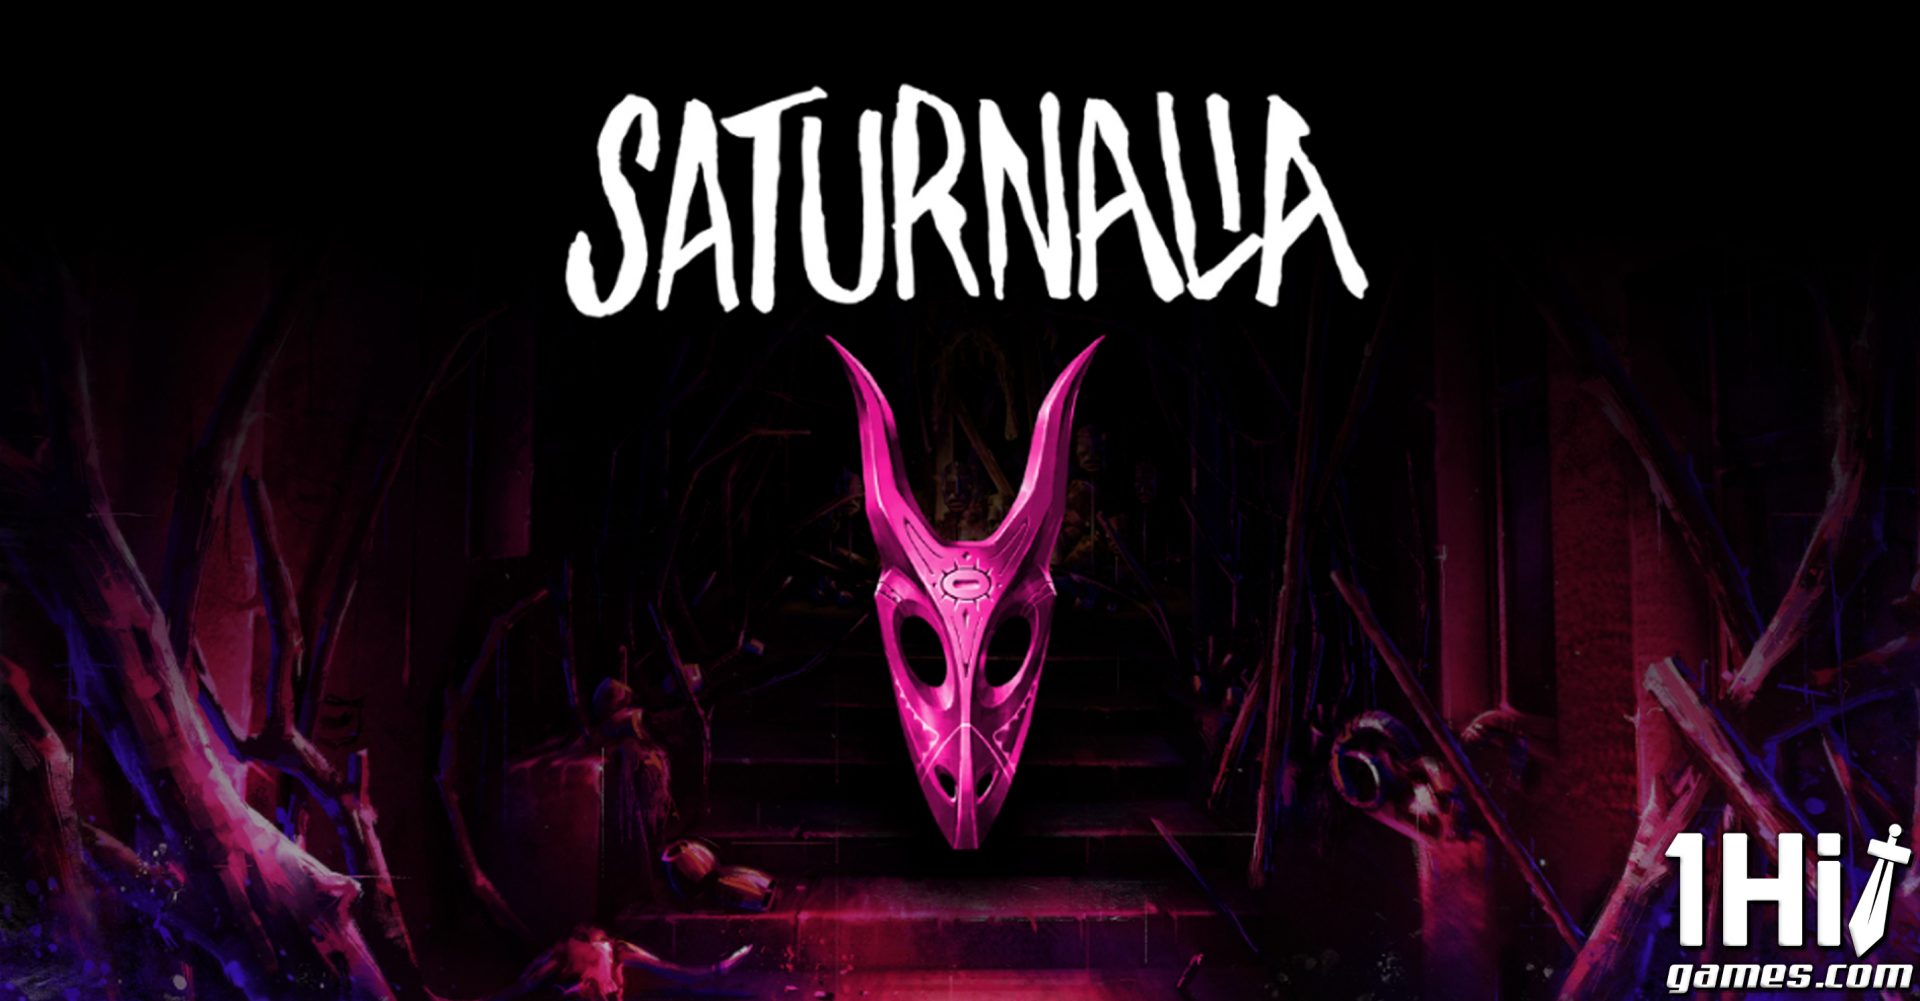 Saturnalia